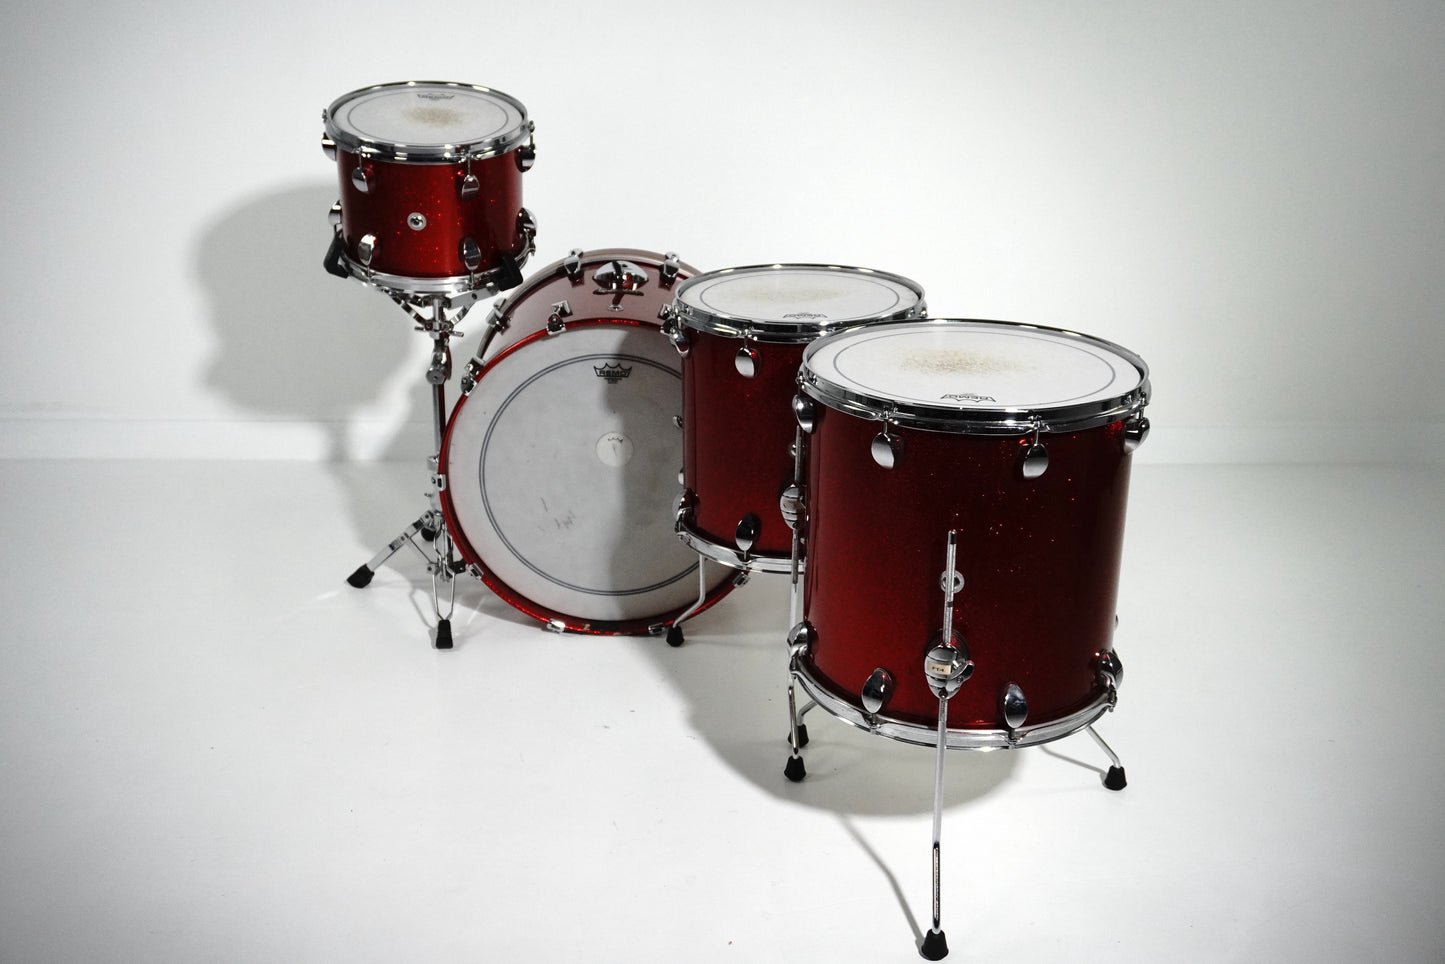 Premier 4-Piece Drum Kit in Red Moon Sparkle 22,12,14,16